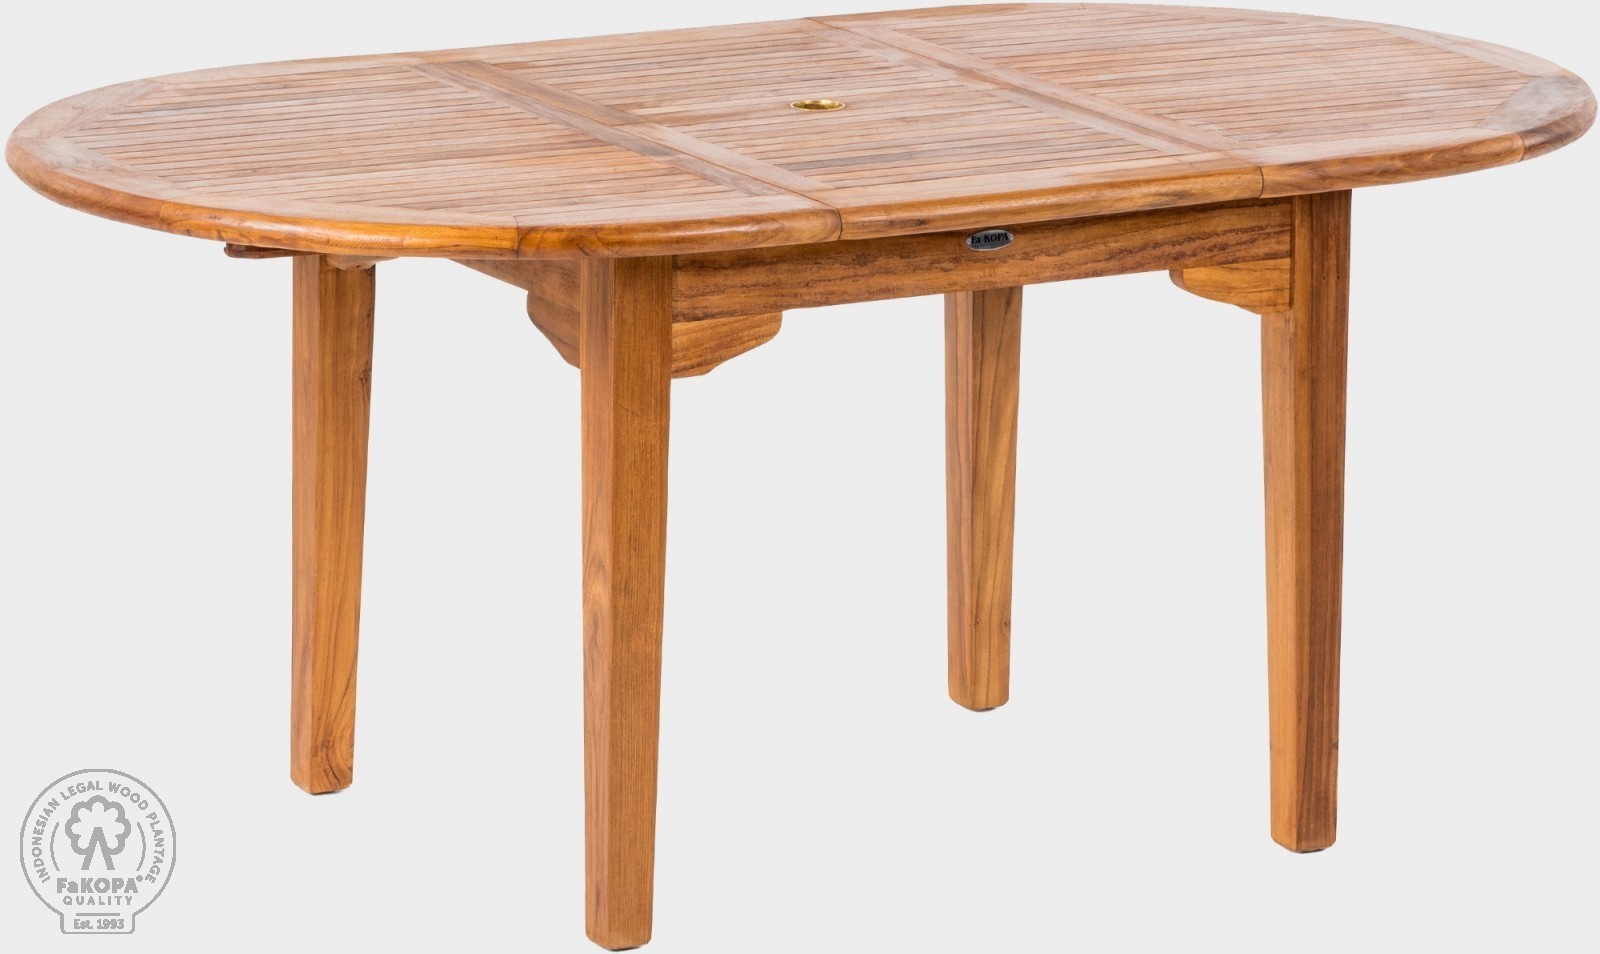 FaKOPA s. r. o. ELEGANTE - rozkládací oválný teakový stůl 120 x 160-220 cm, teak